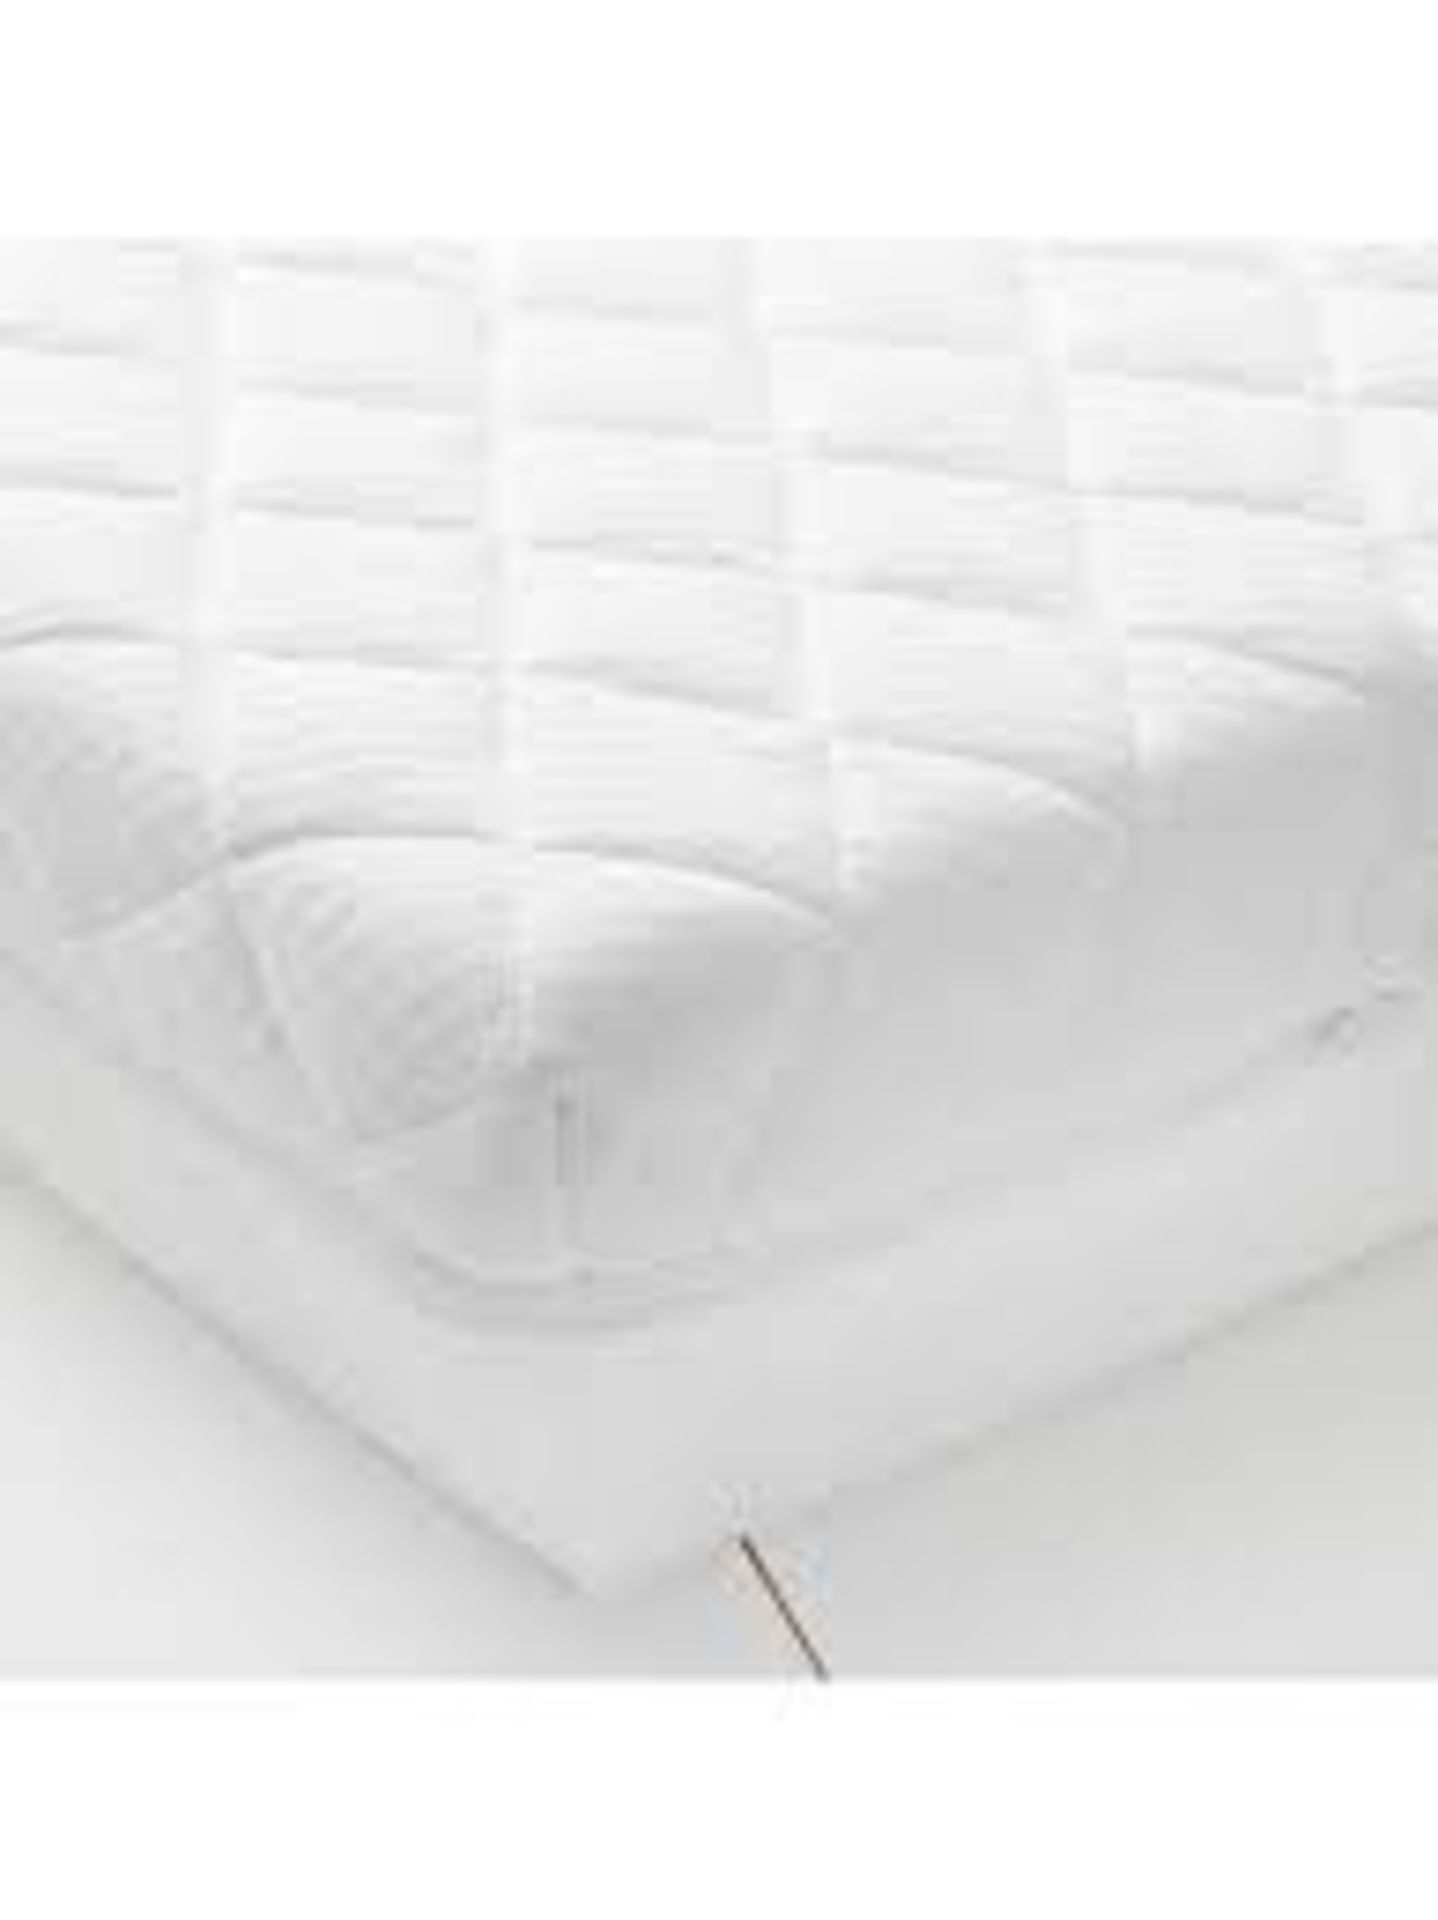 Bagged Baby Sleep Premium Foam Cot Bed Mattress 140cm x 70cm x 10cm RRP £60 (BUN338647) (Pictures